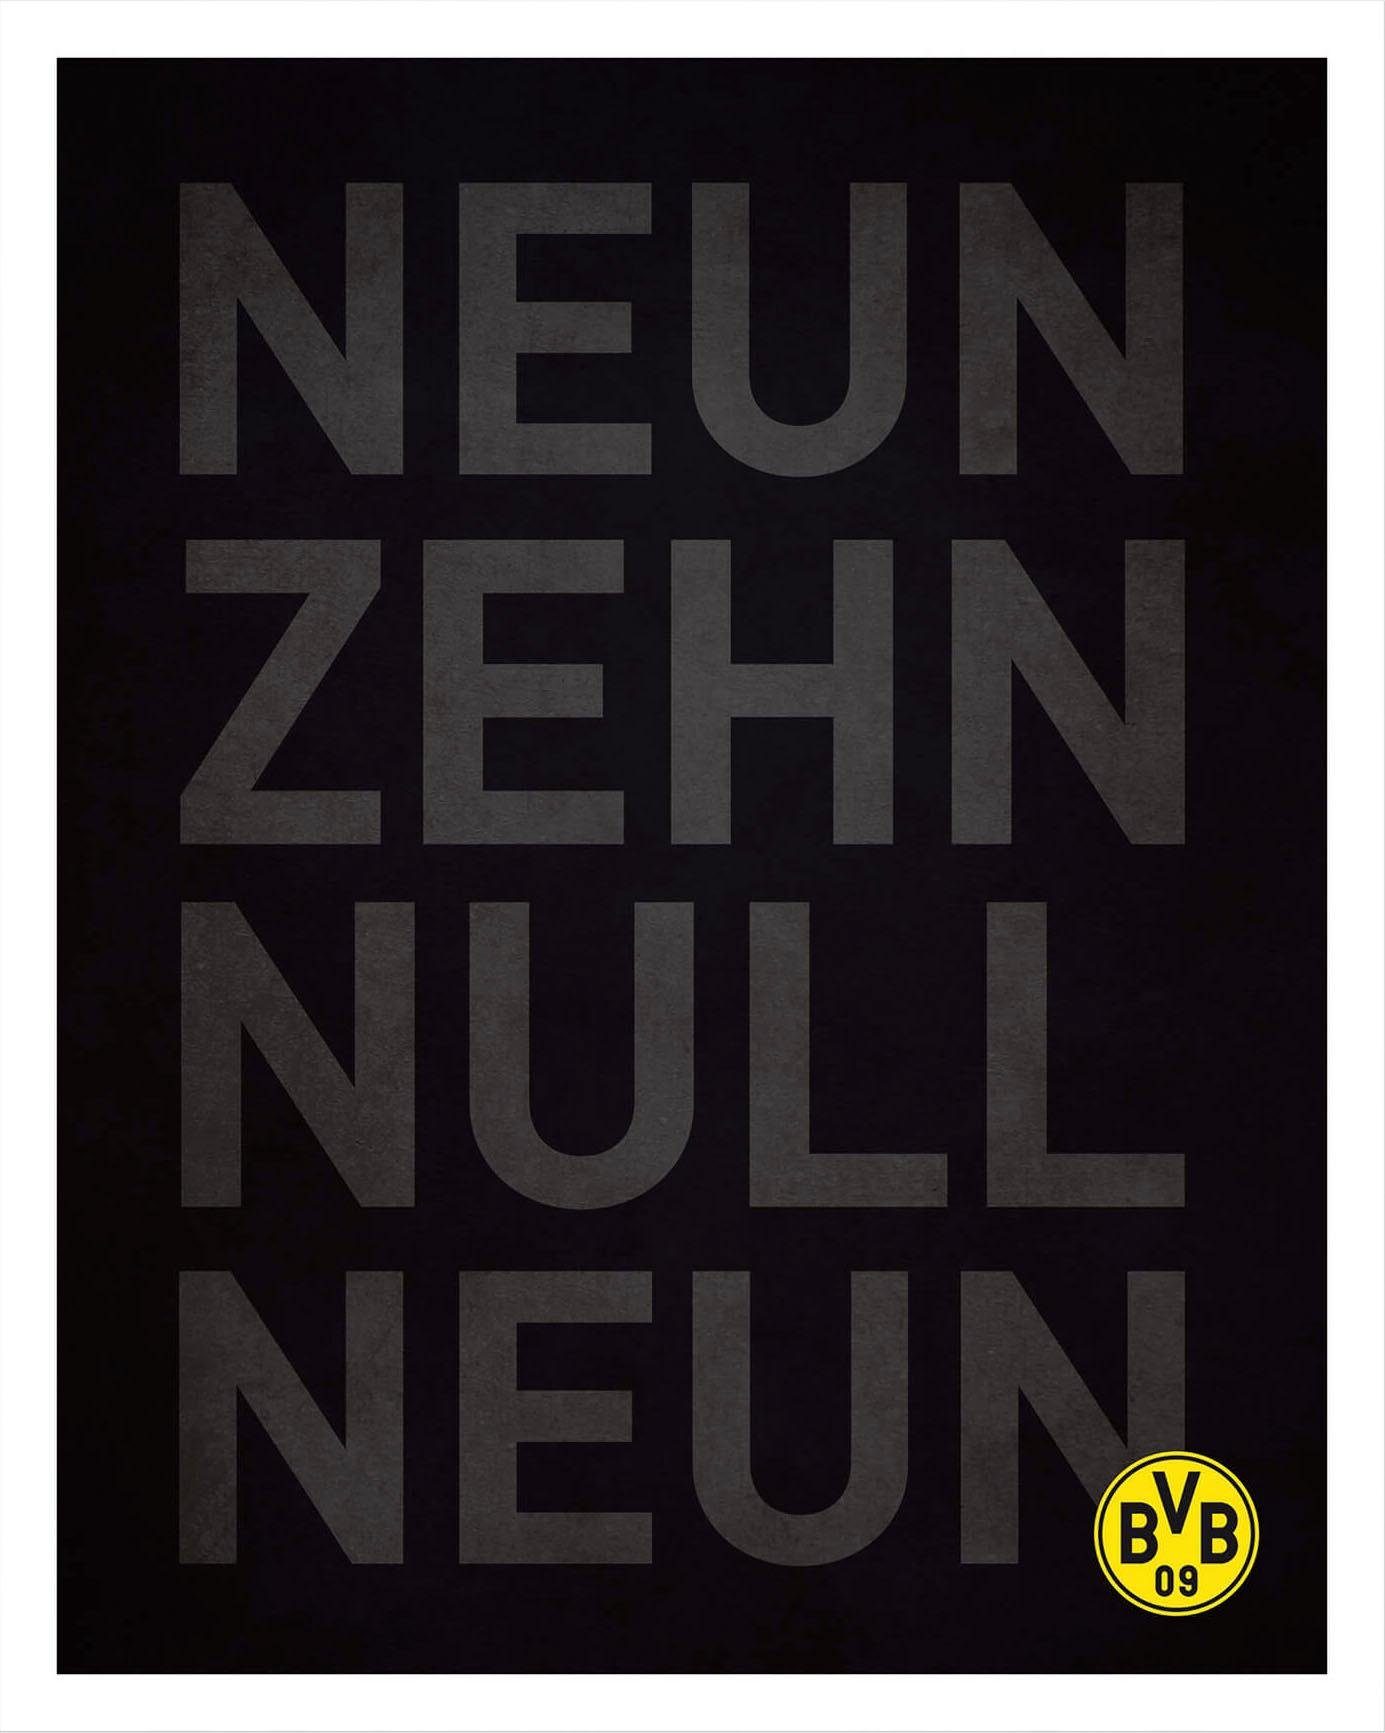 Wall-Art Poster BVB Neun Zehn Null Neun, Poster, Wandbild, Bild, Wandposter